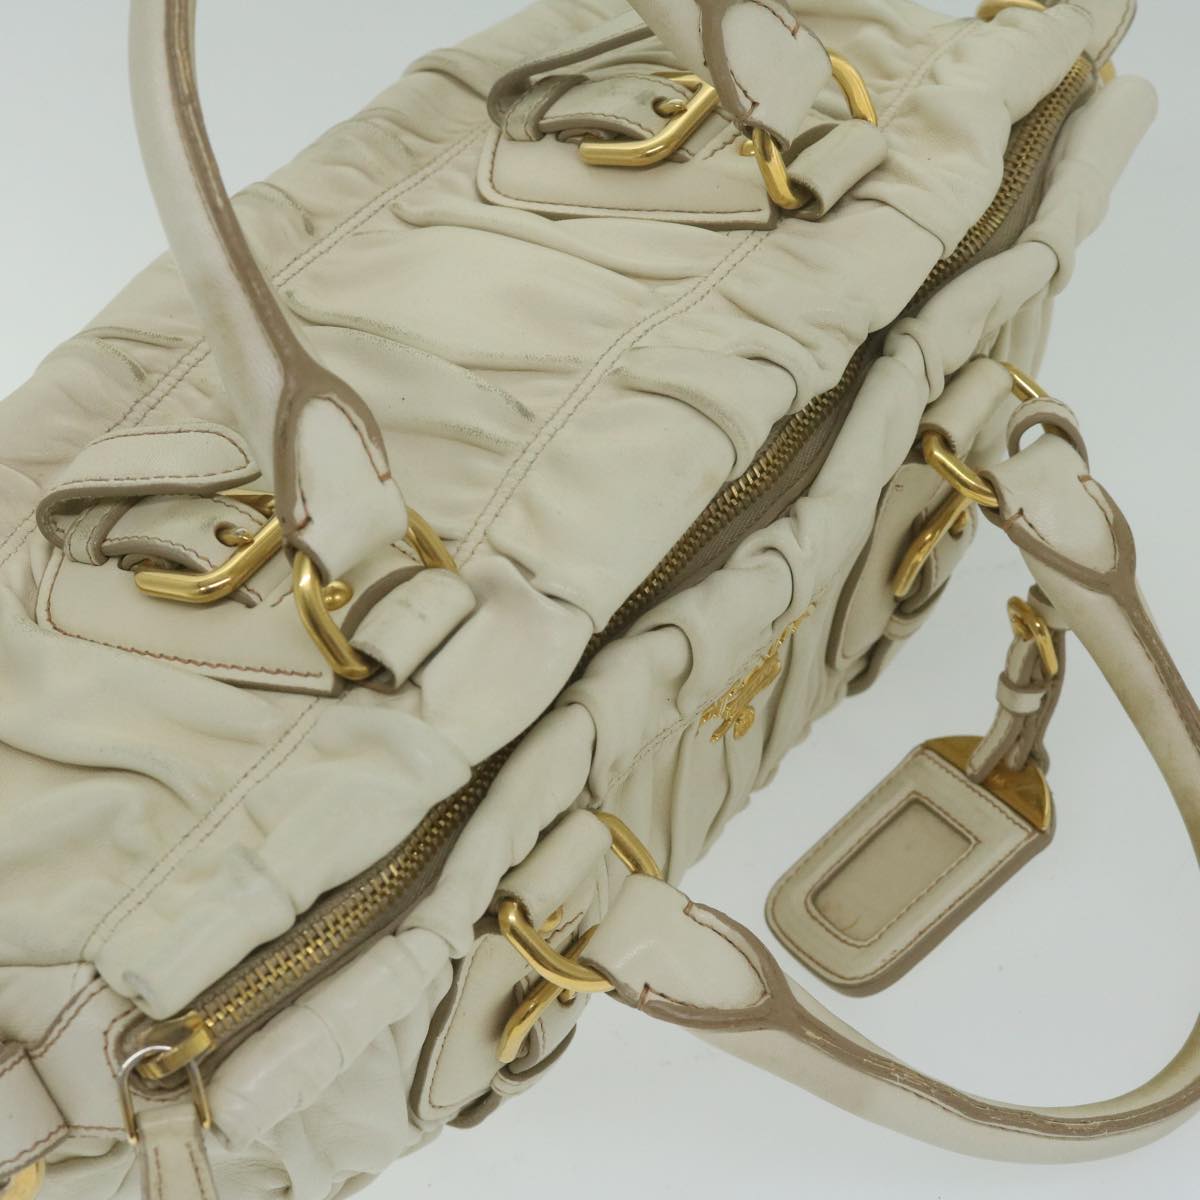 PRADA Hand Bag Leather 2way White Auth ai753